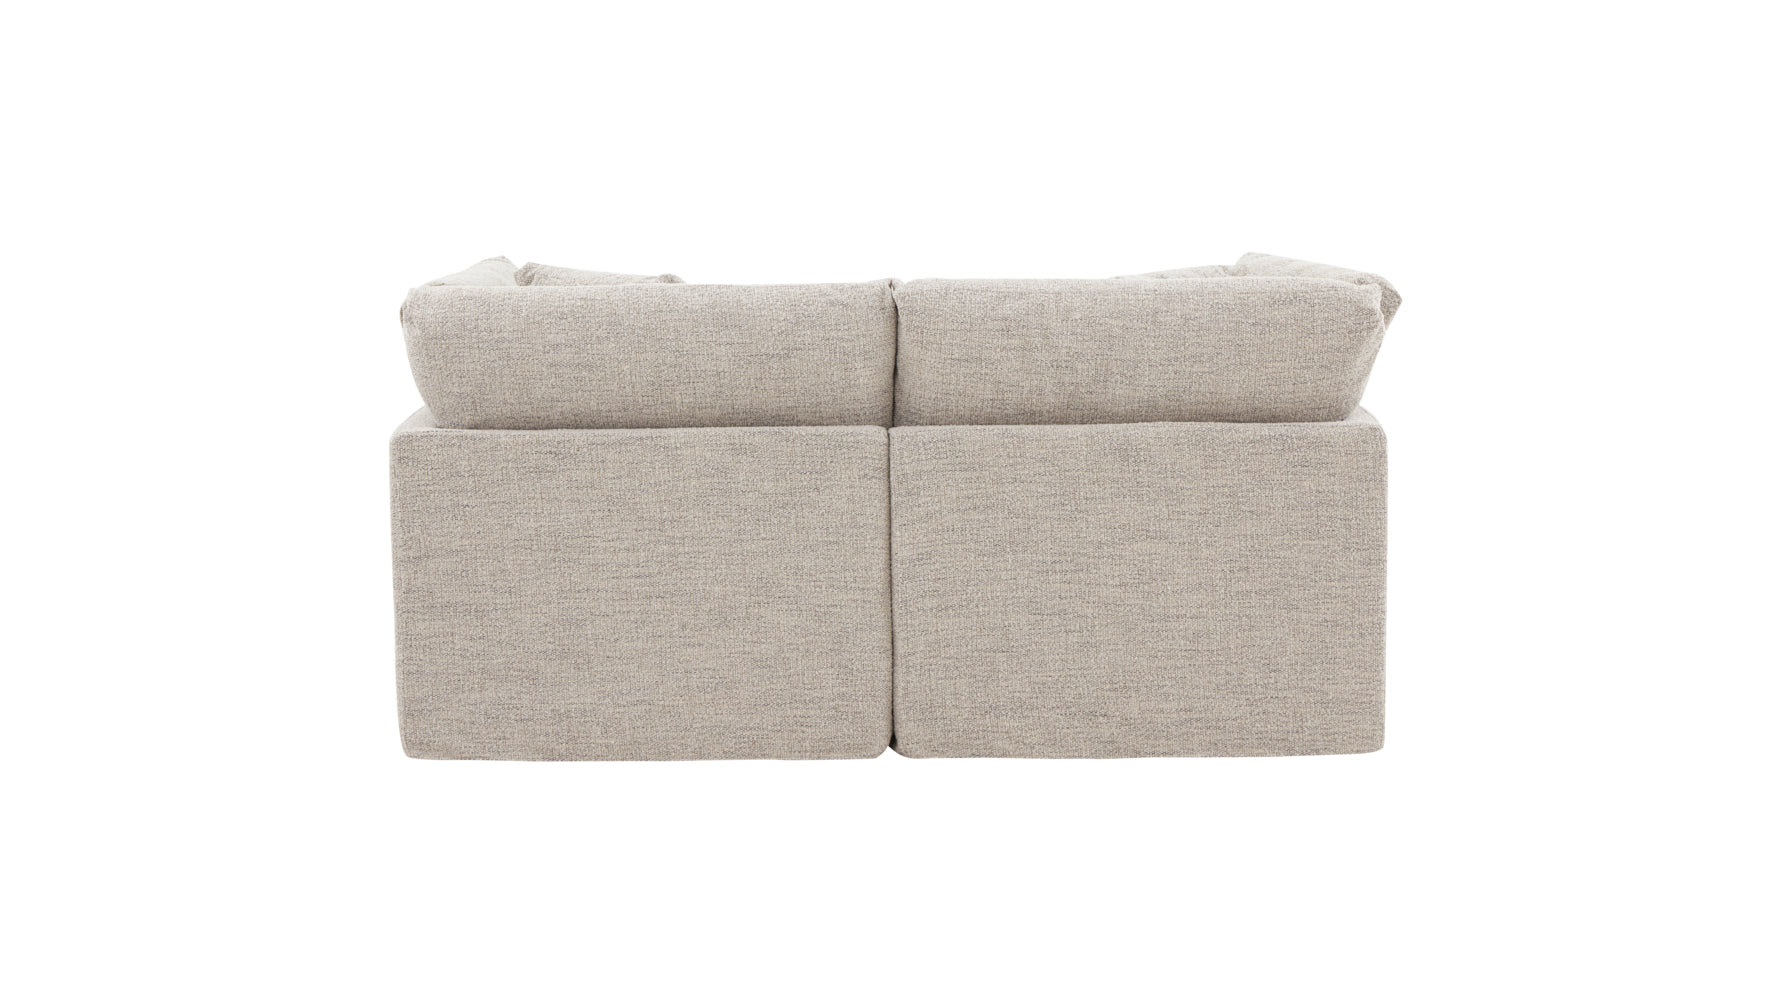 Get Together™ 2-Piece Modular Sofa, Standard, Oatmeal - Image 7